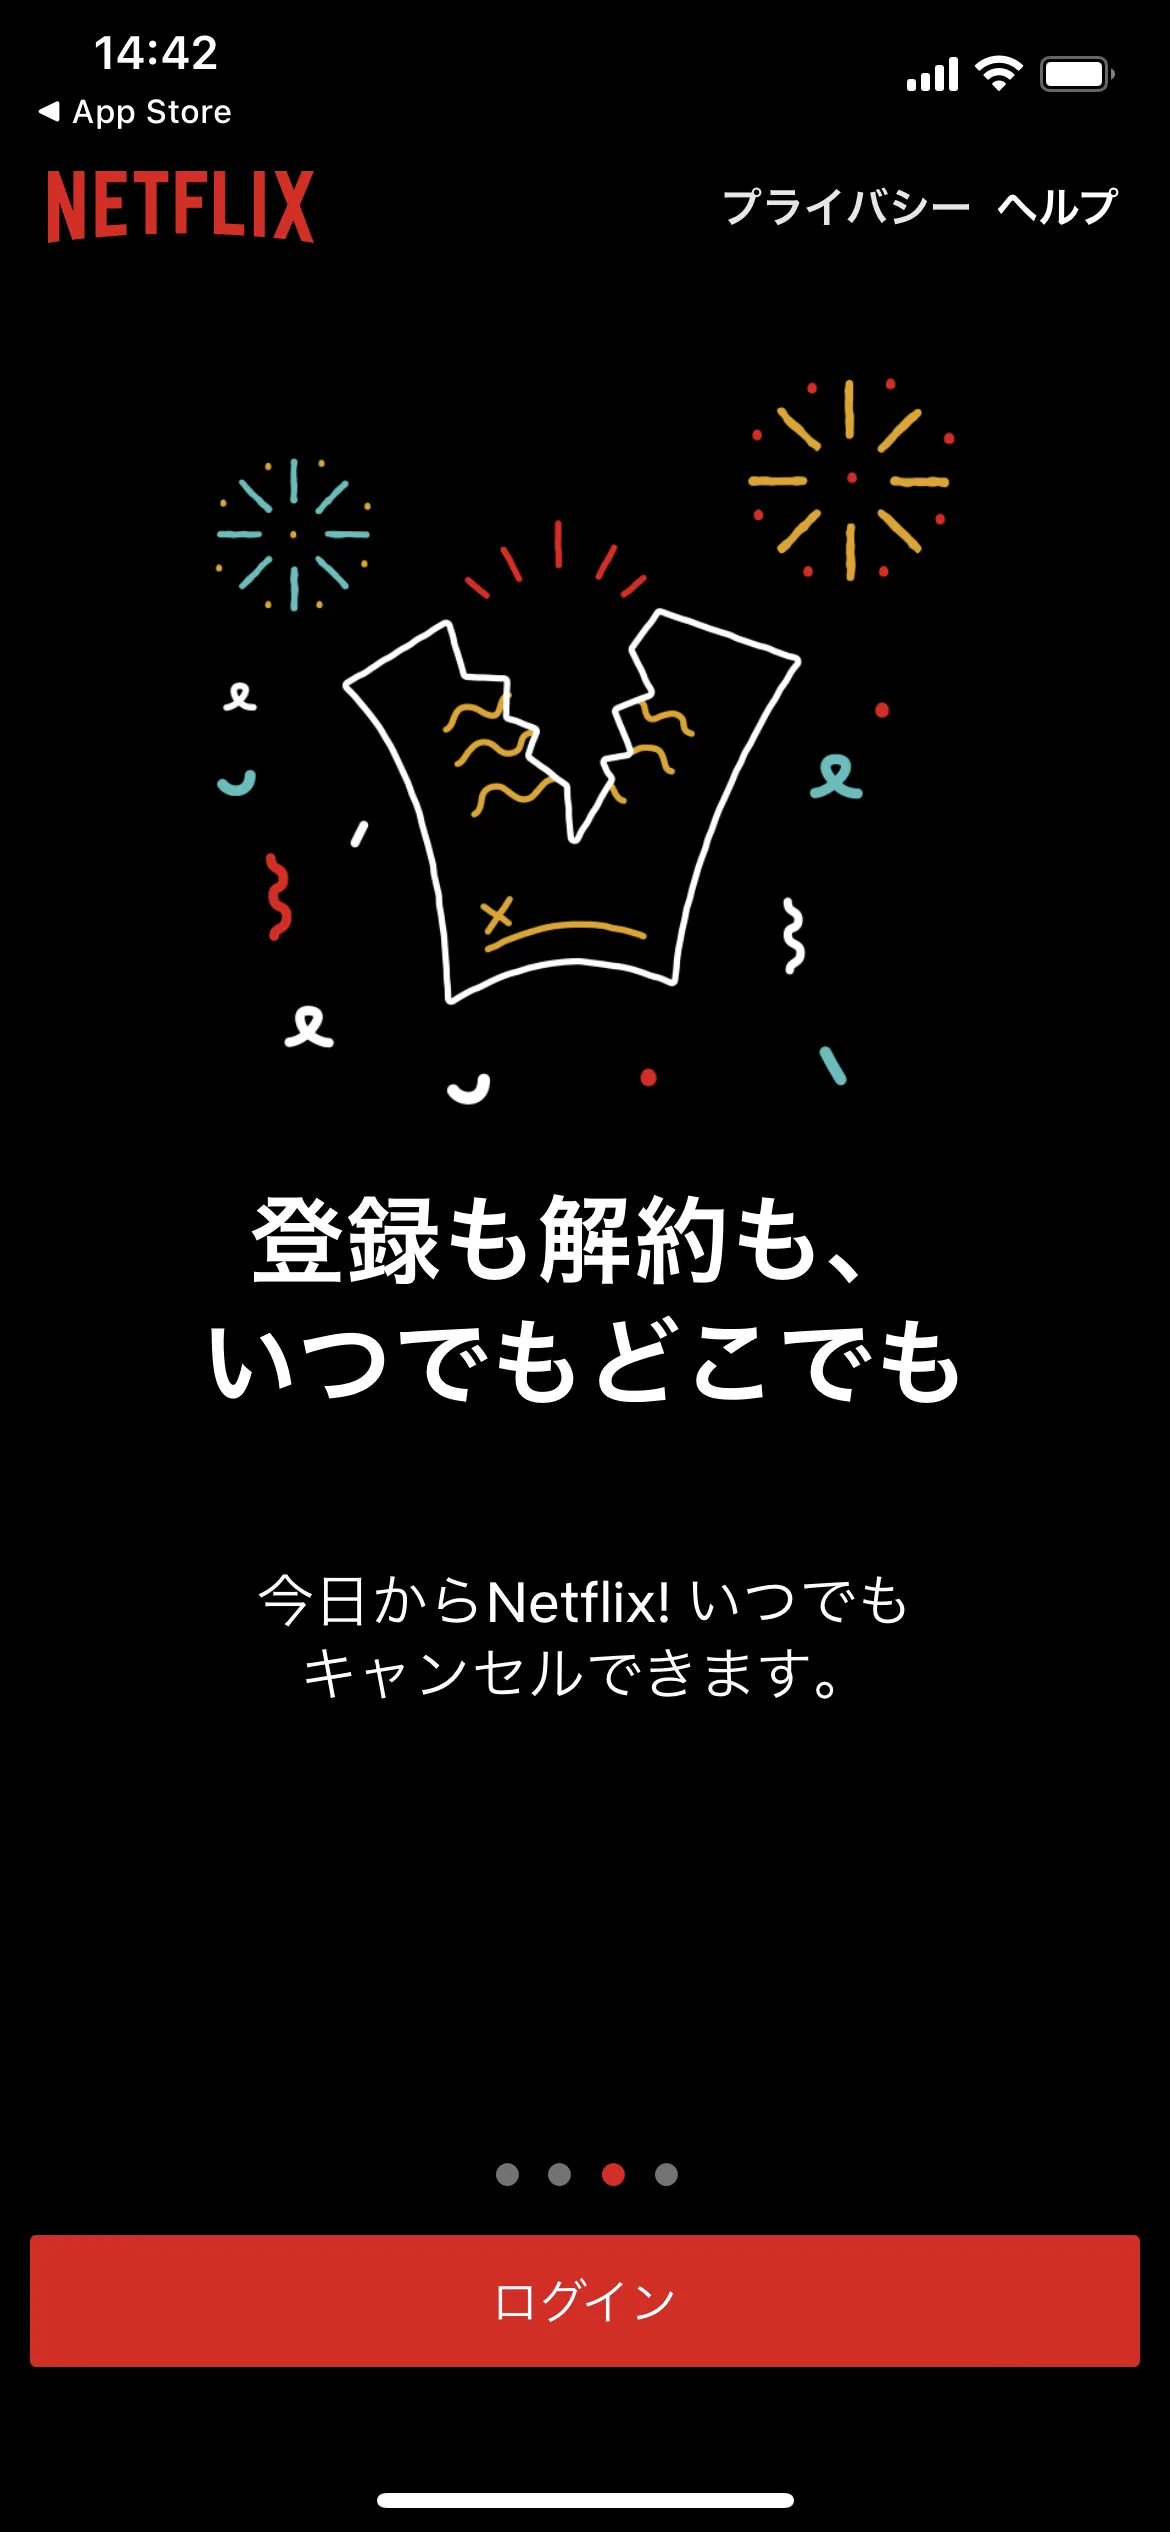 Netflix オンボーディング screen